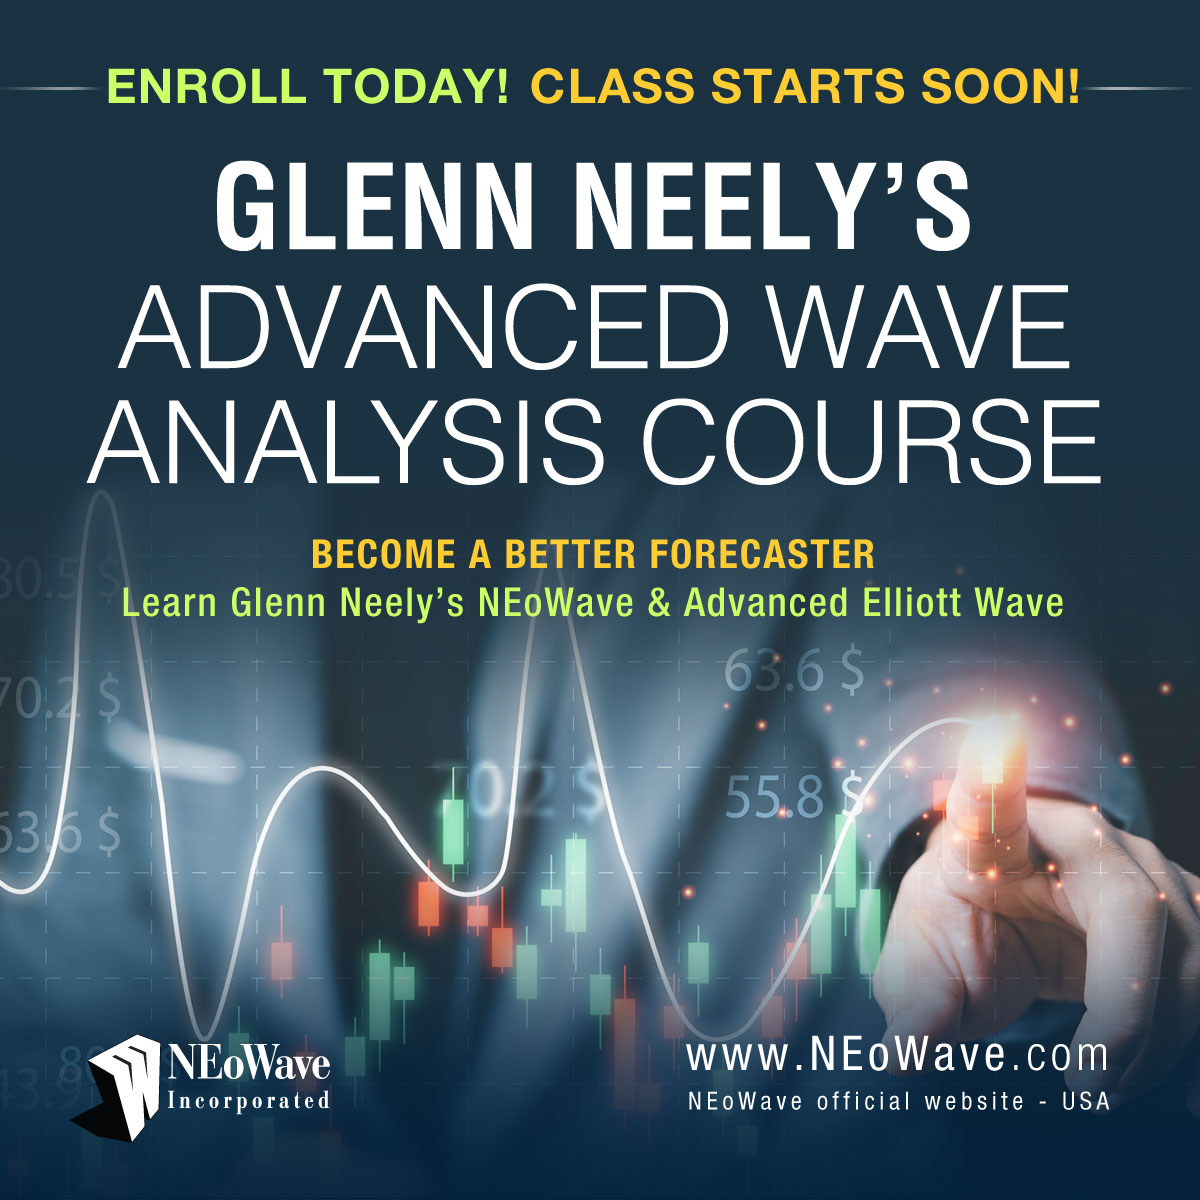 Glenn Neely's Advanced Wave Analysis Course